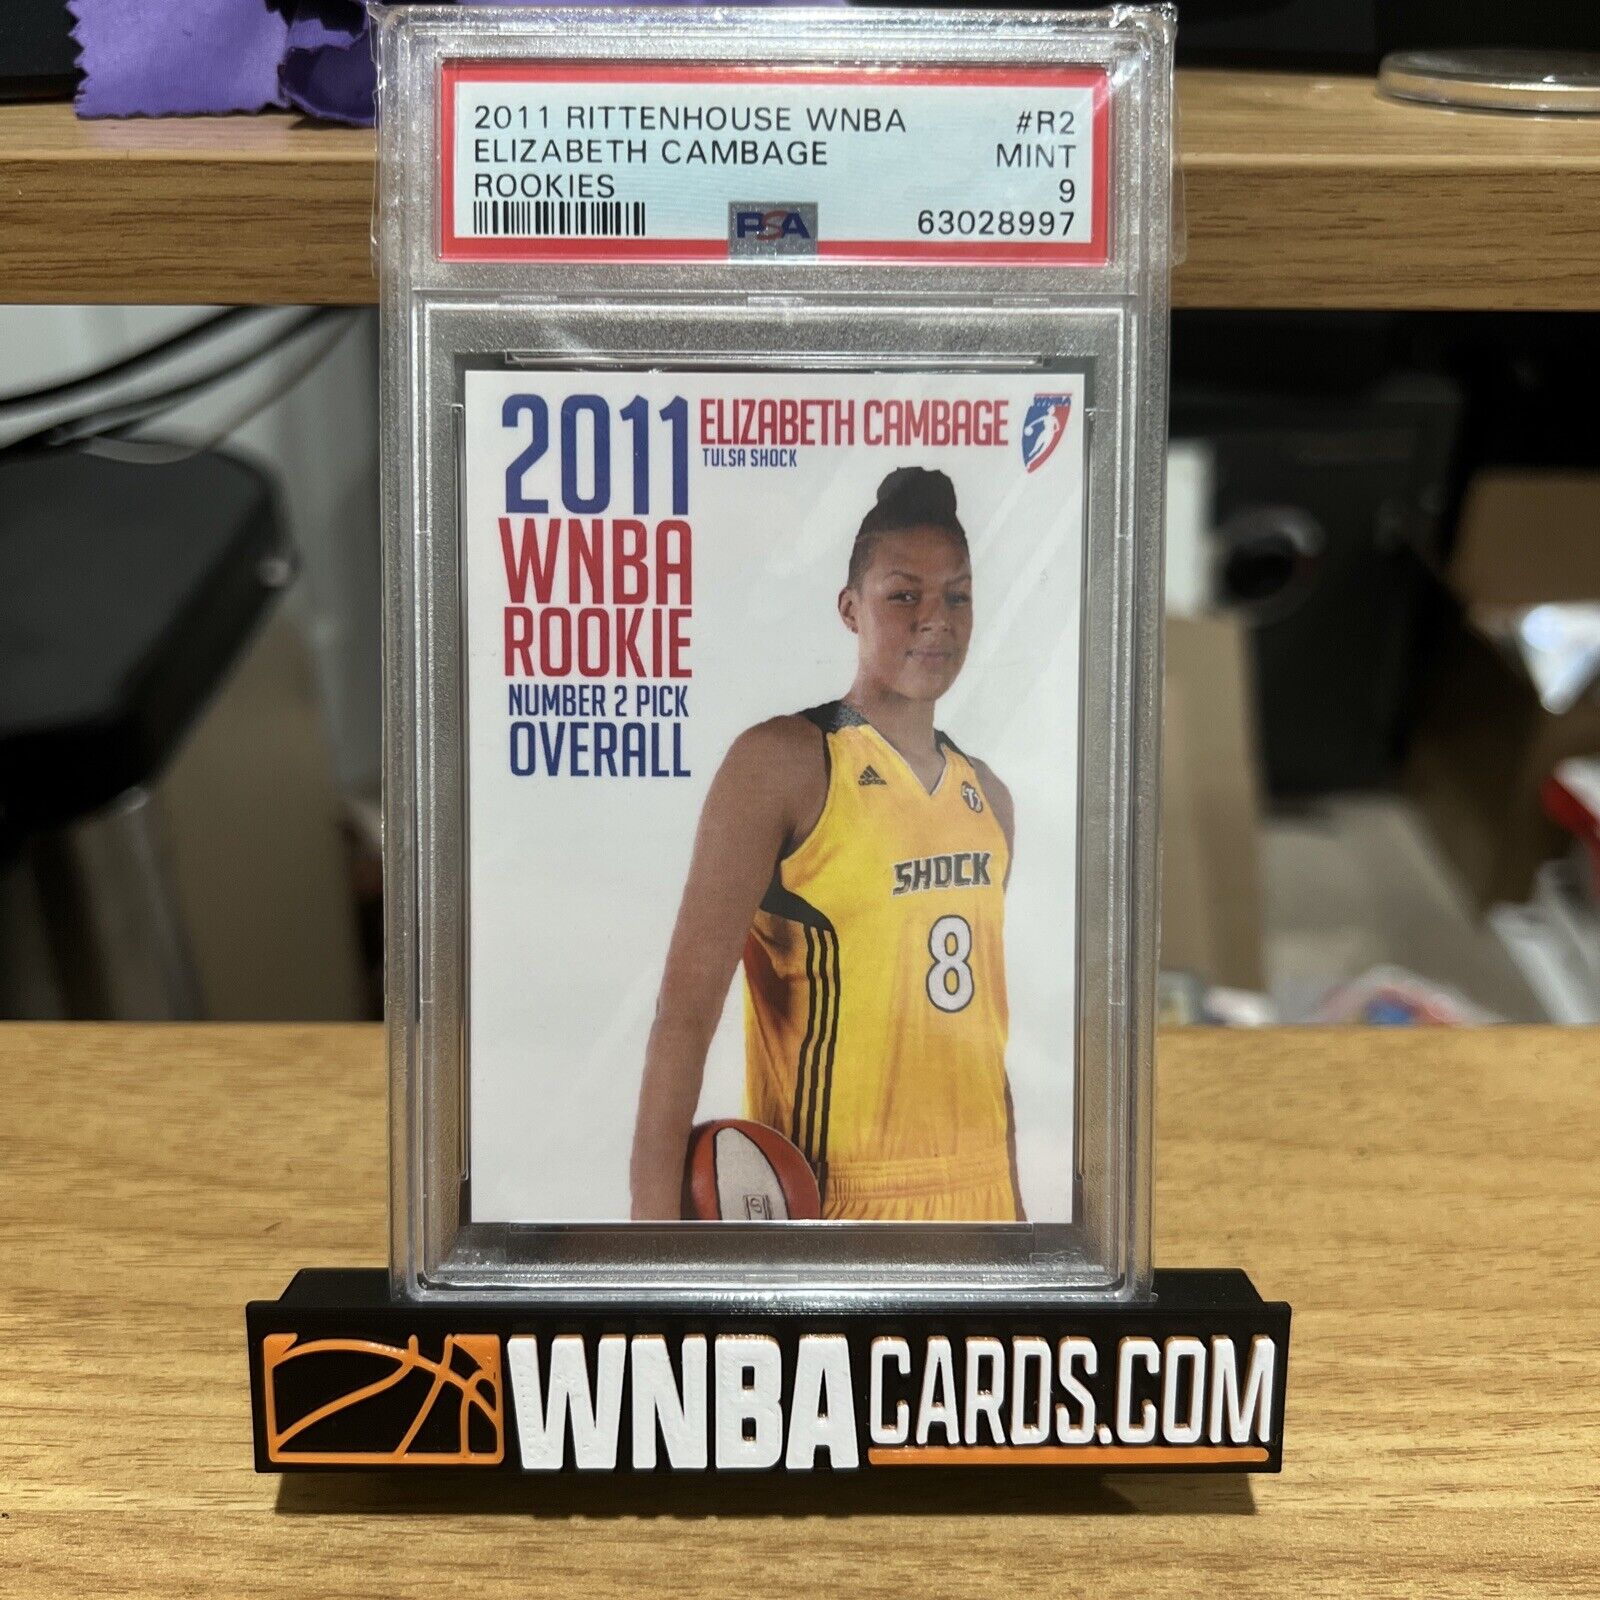 2011 Rittenhouse WNBA Liz Cambage Rookie Card PSA 9 130/225